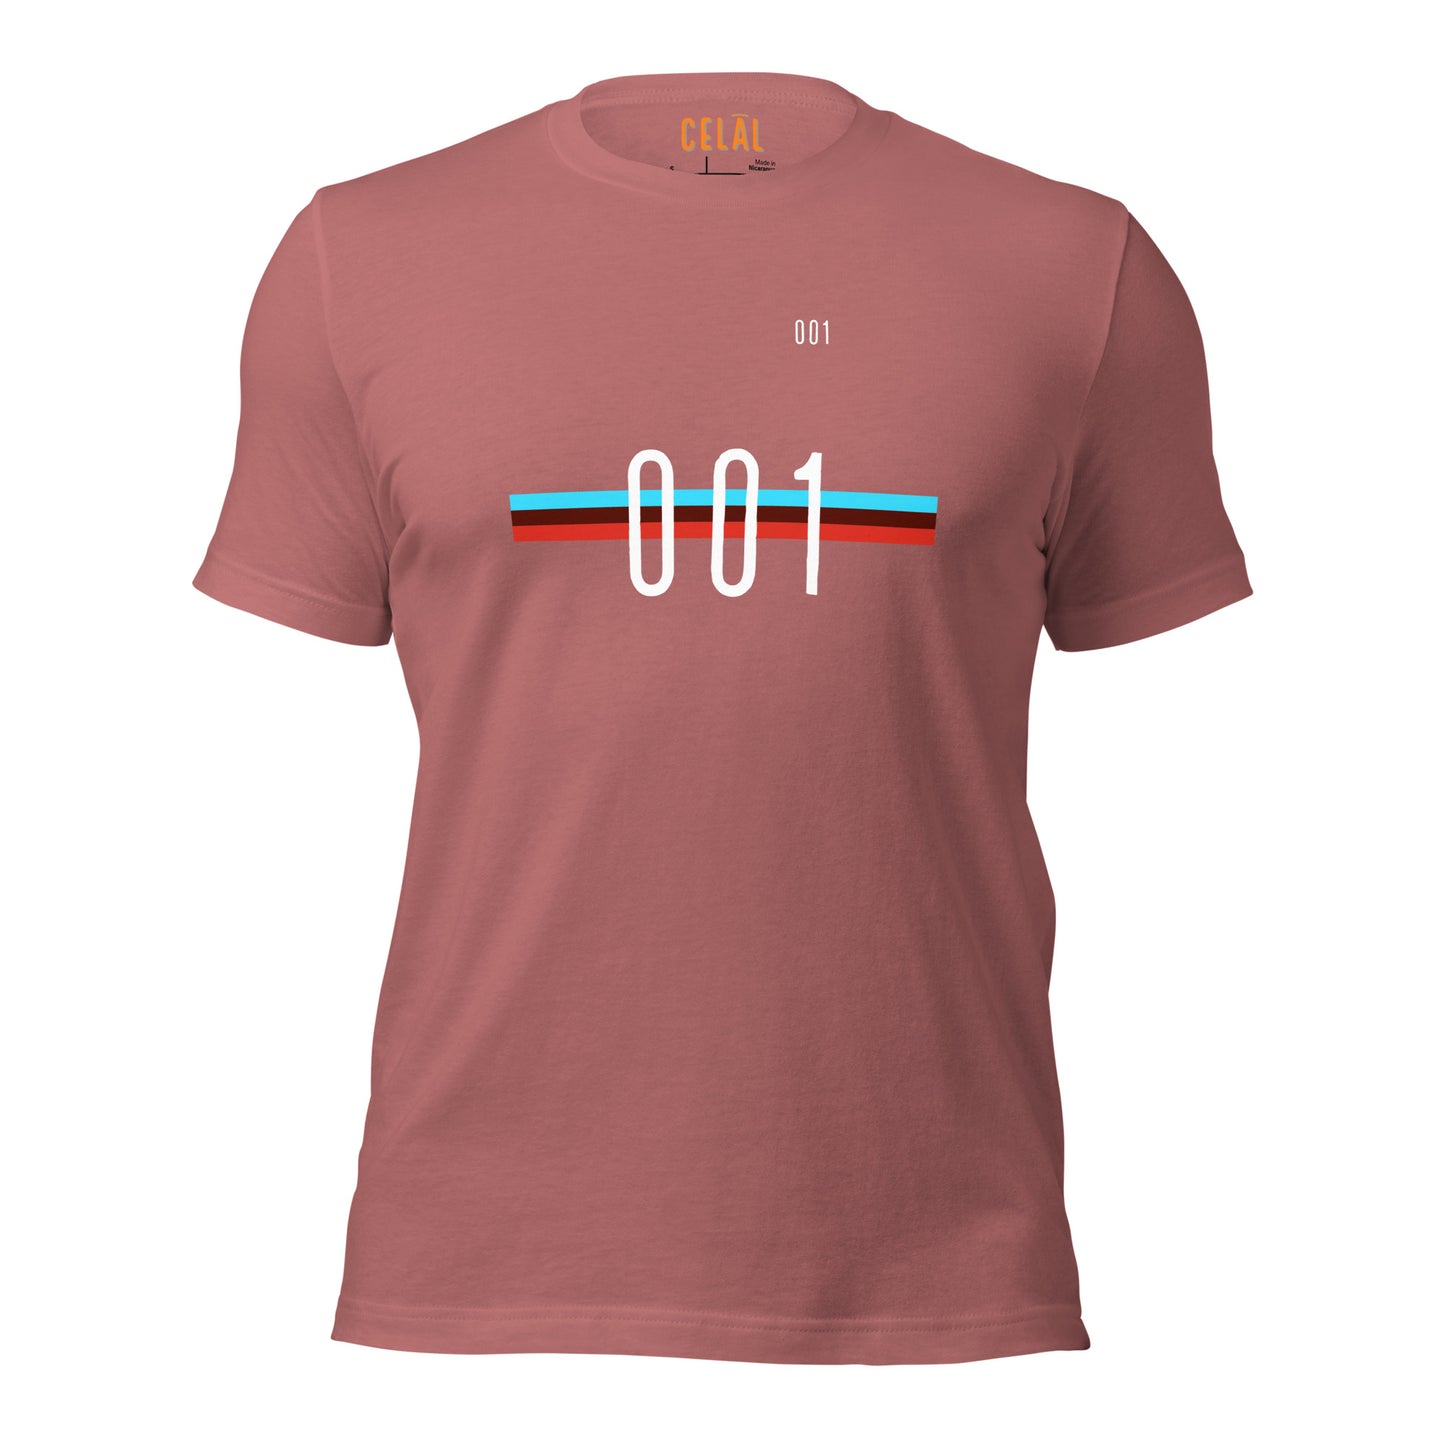 001 Unisex t-shirt